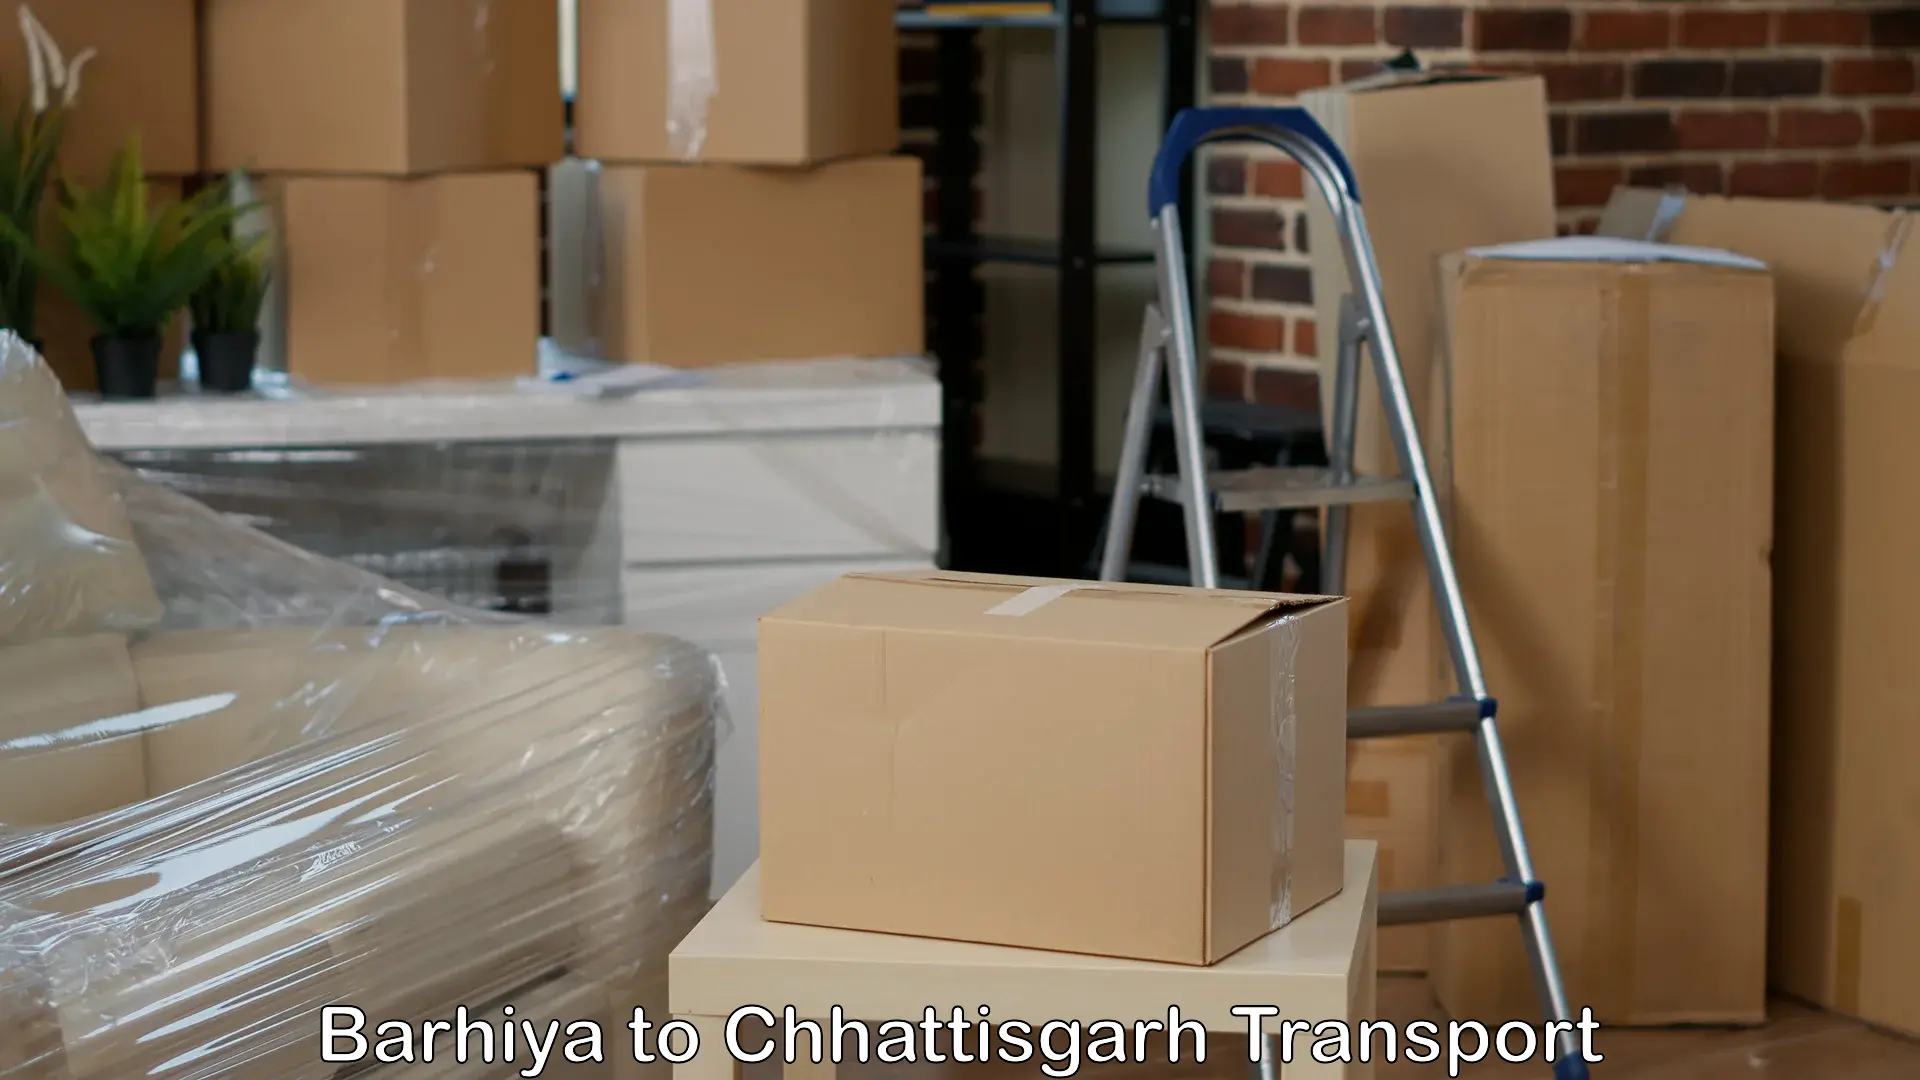 Goods delivery service Barhiya to Berla